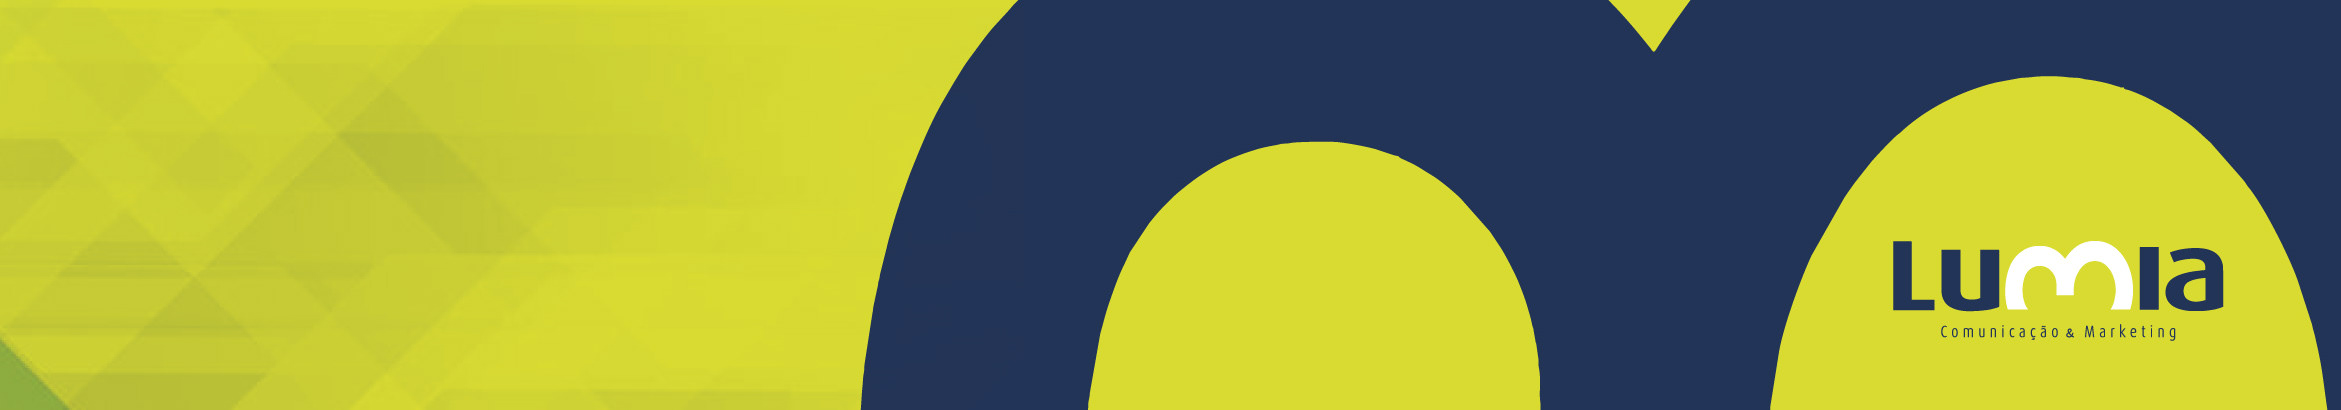 Agência Lumia's profile banner